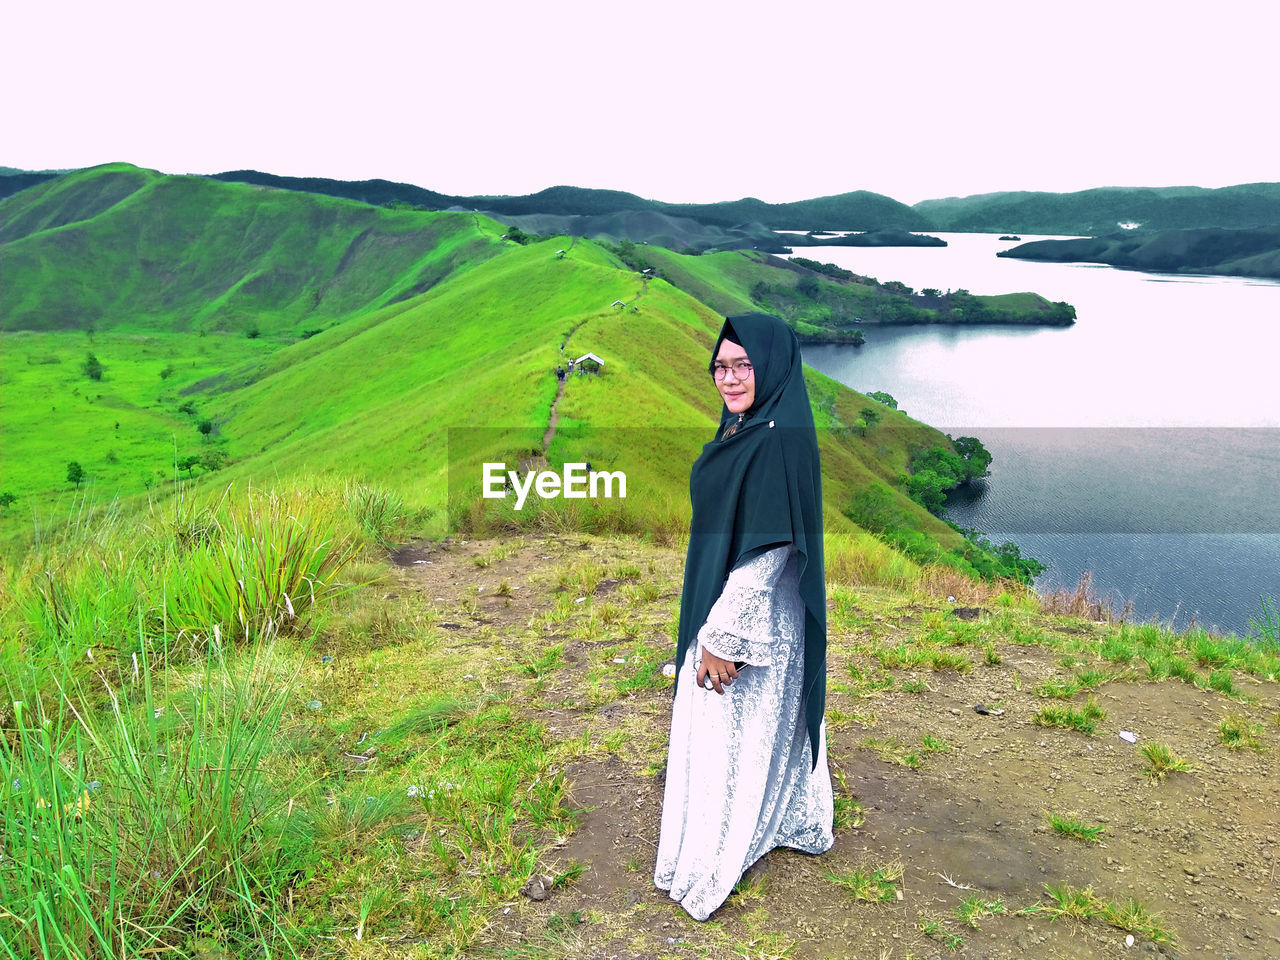 Portrait of woman in headscarf standing on mountain